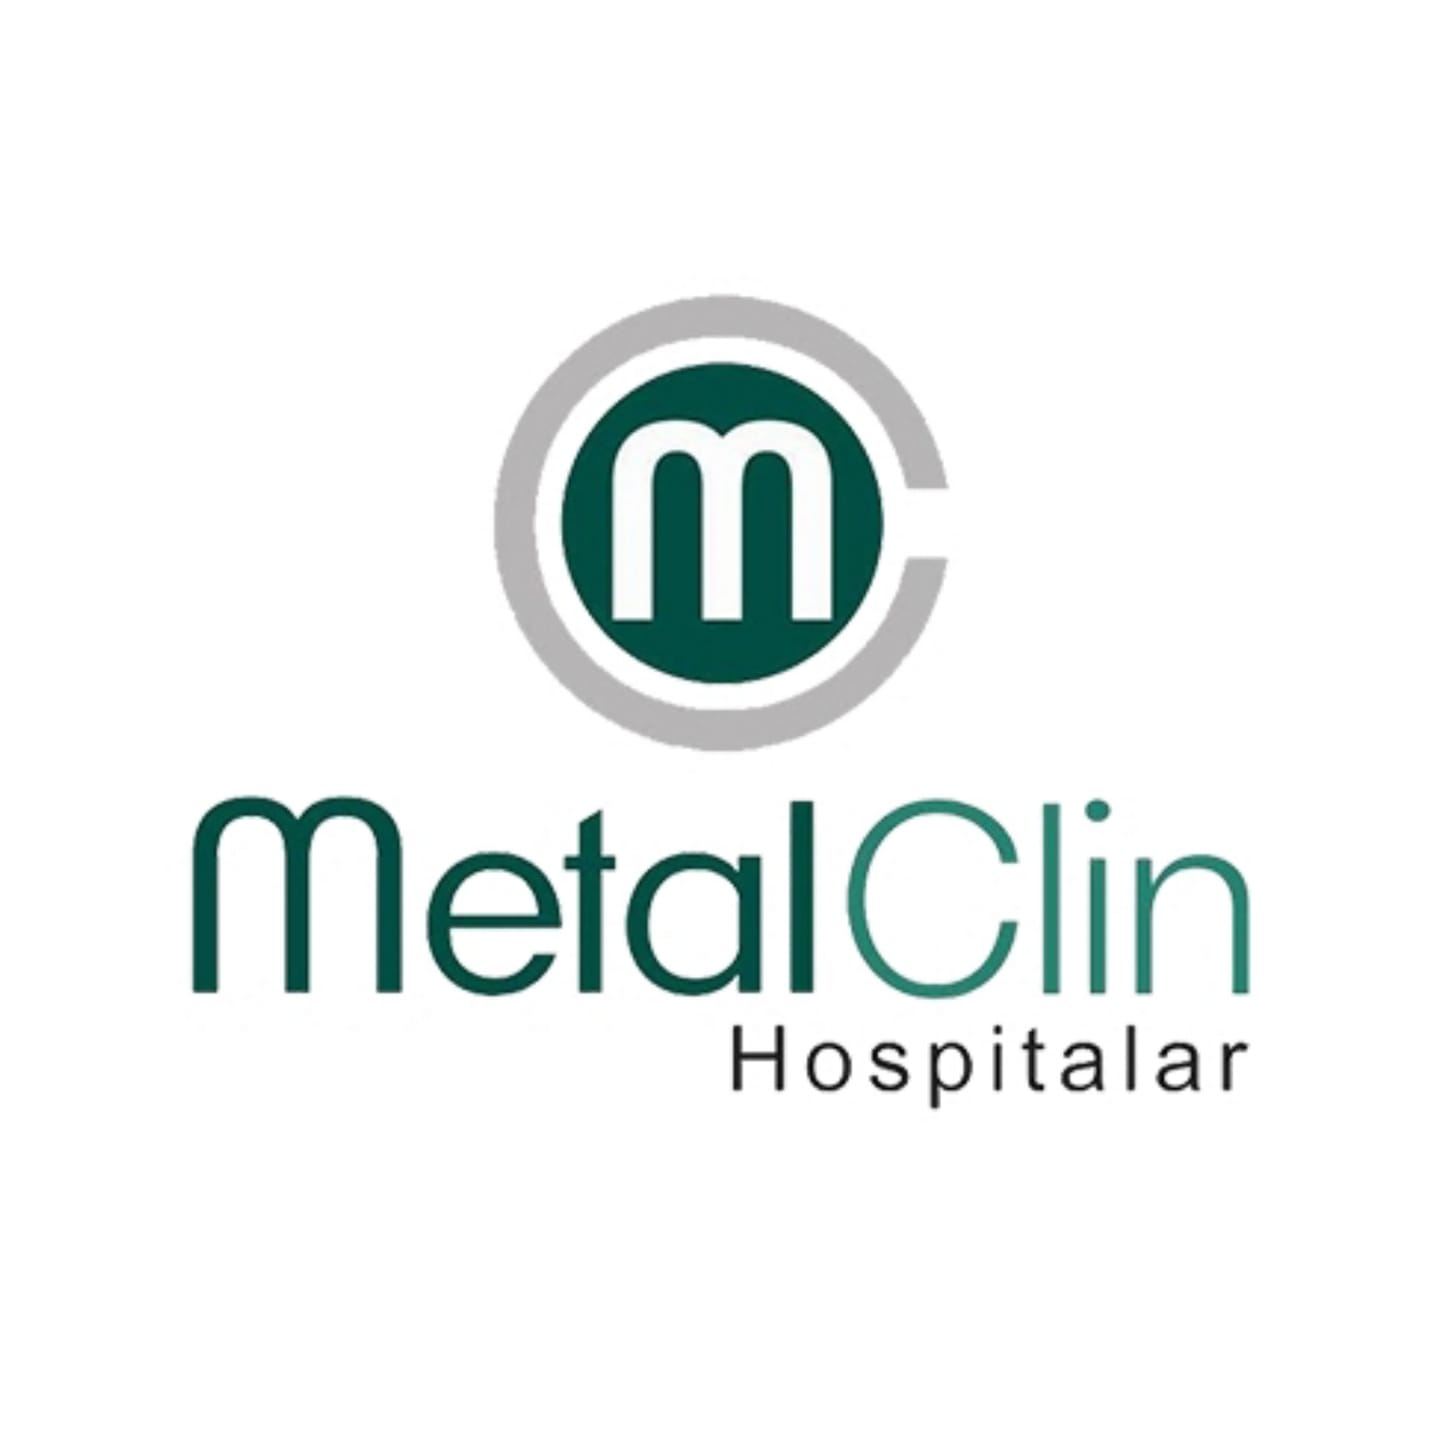 MetalClin Hospitalar